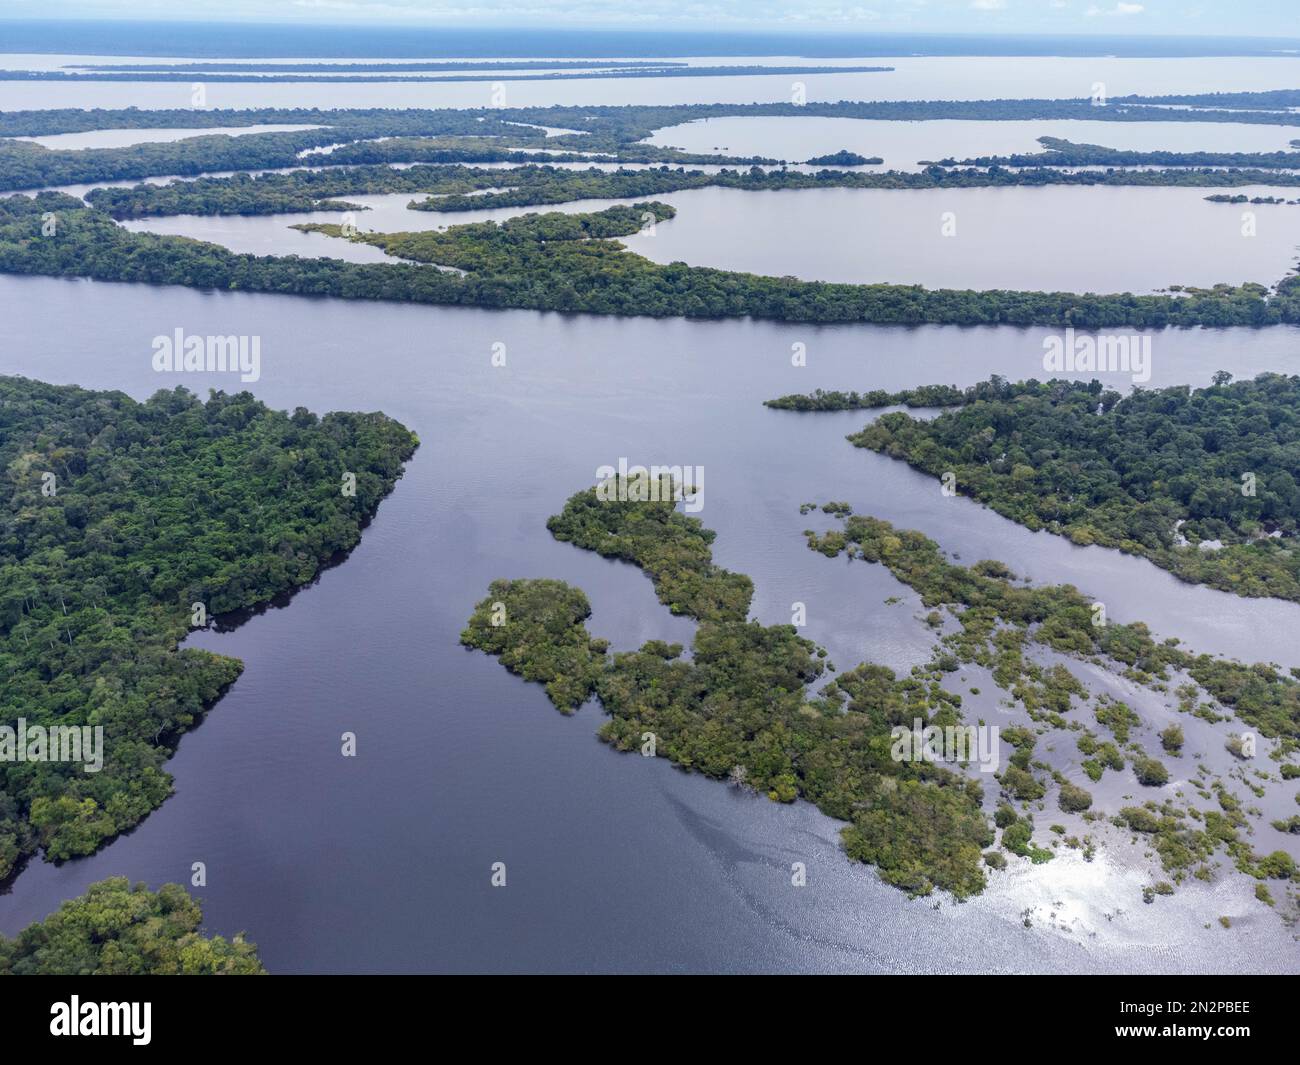 Anavilhanas islands, world's largest river archipelago. Rio Negro. Aerial view. Anavilhanas National Park, Central Amazon Ecological Corridor, Brazil Stock Photo